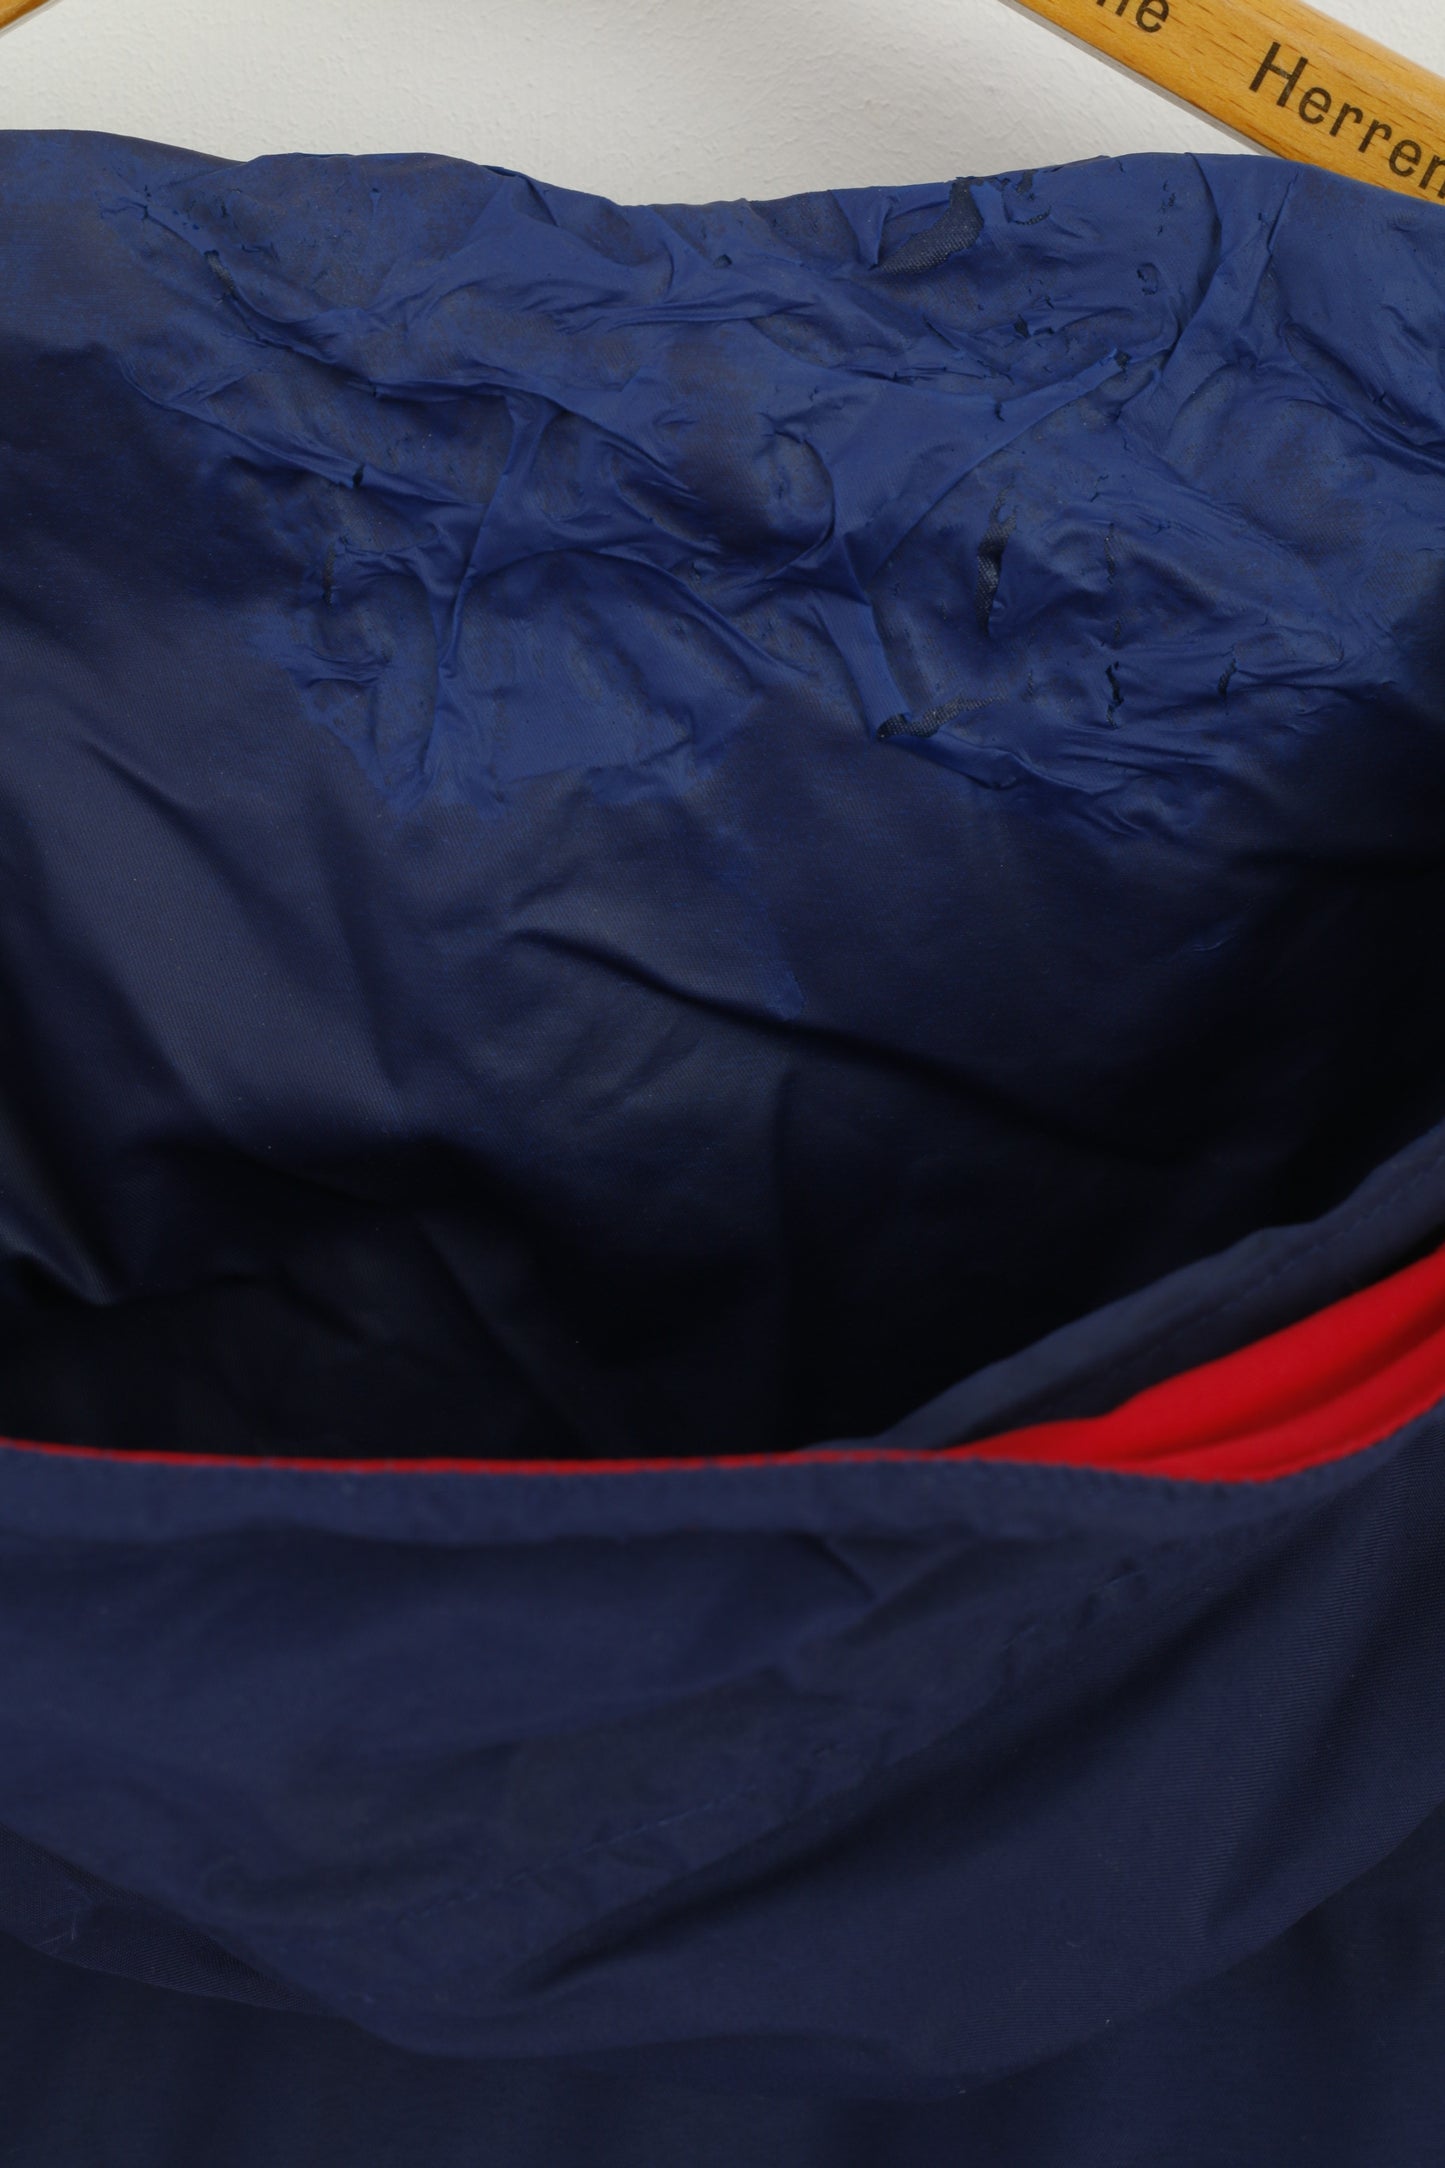 Spraway Men S Jacket Navy Hydro-Dry Nylon Outdoor Hooded Rain Top